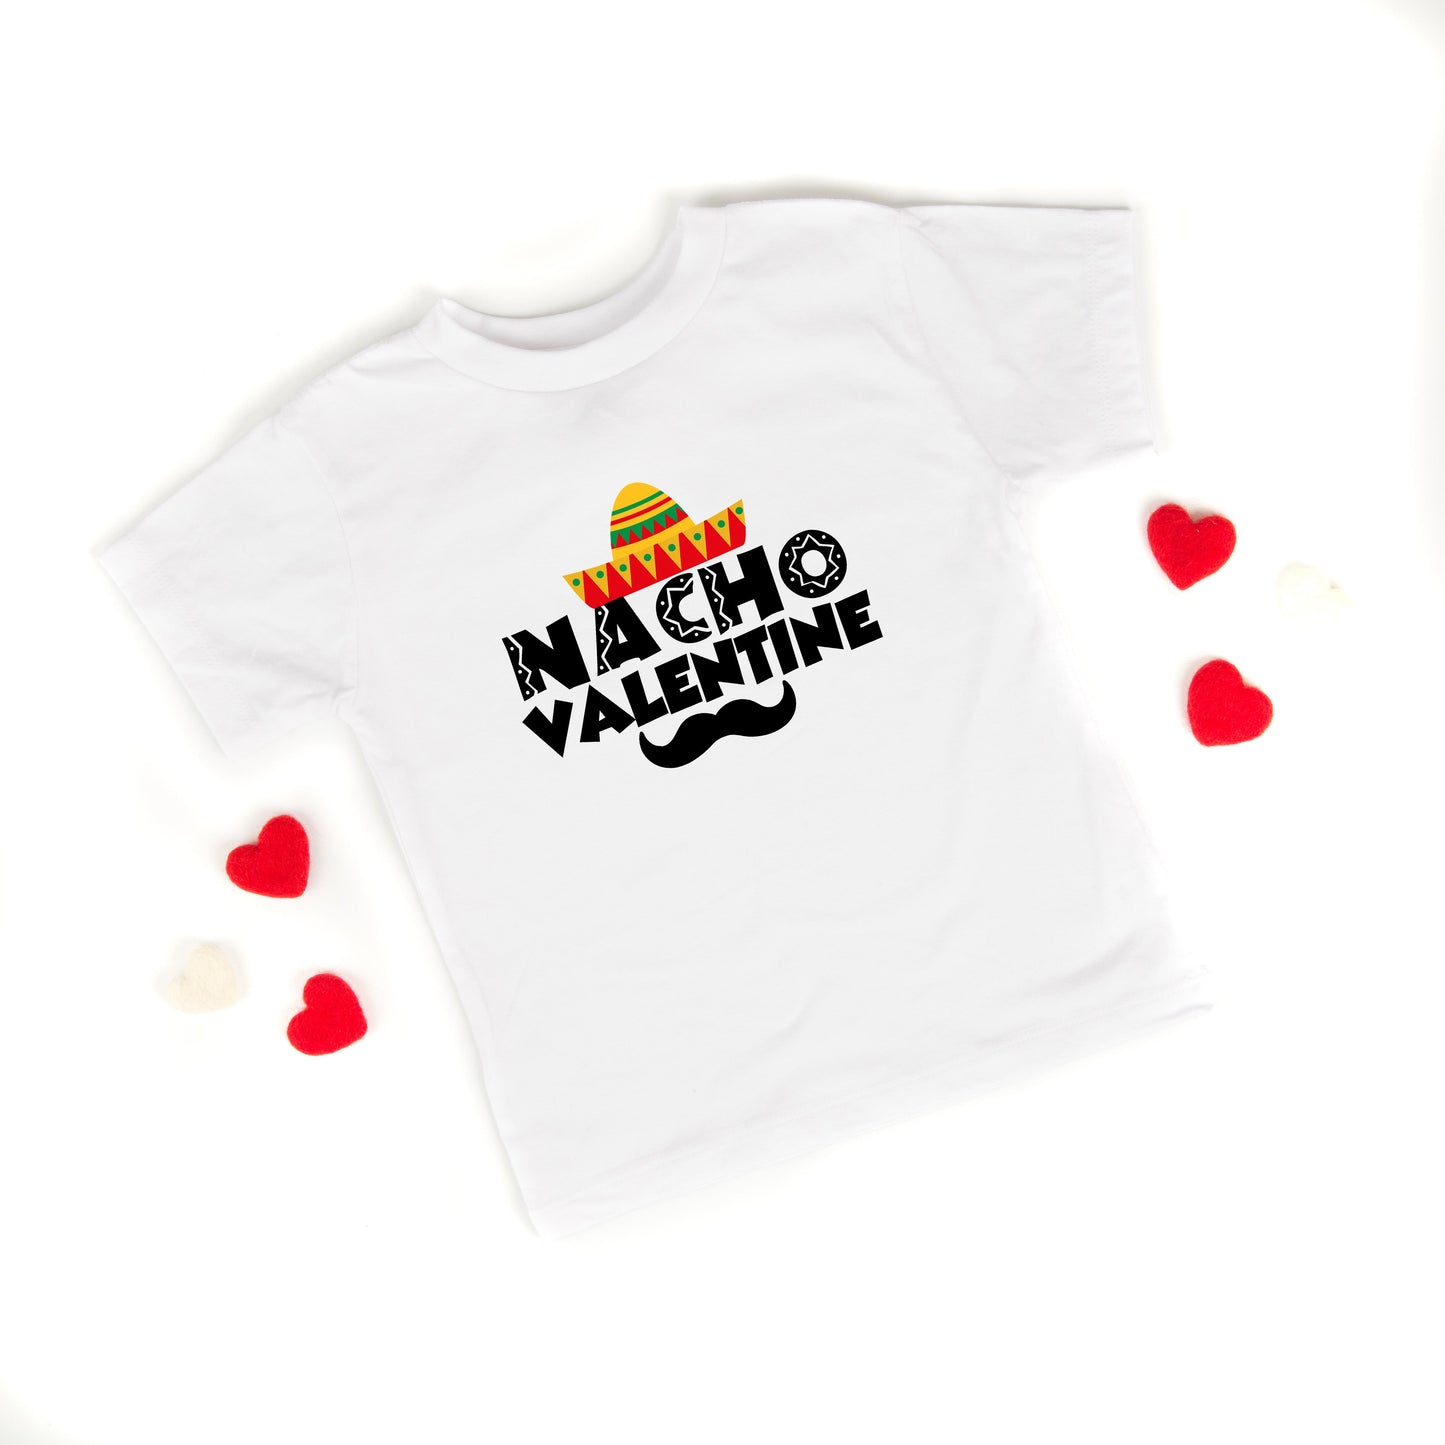 Nacho Valentine | Toddler Short Sleeve Crew Neck